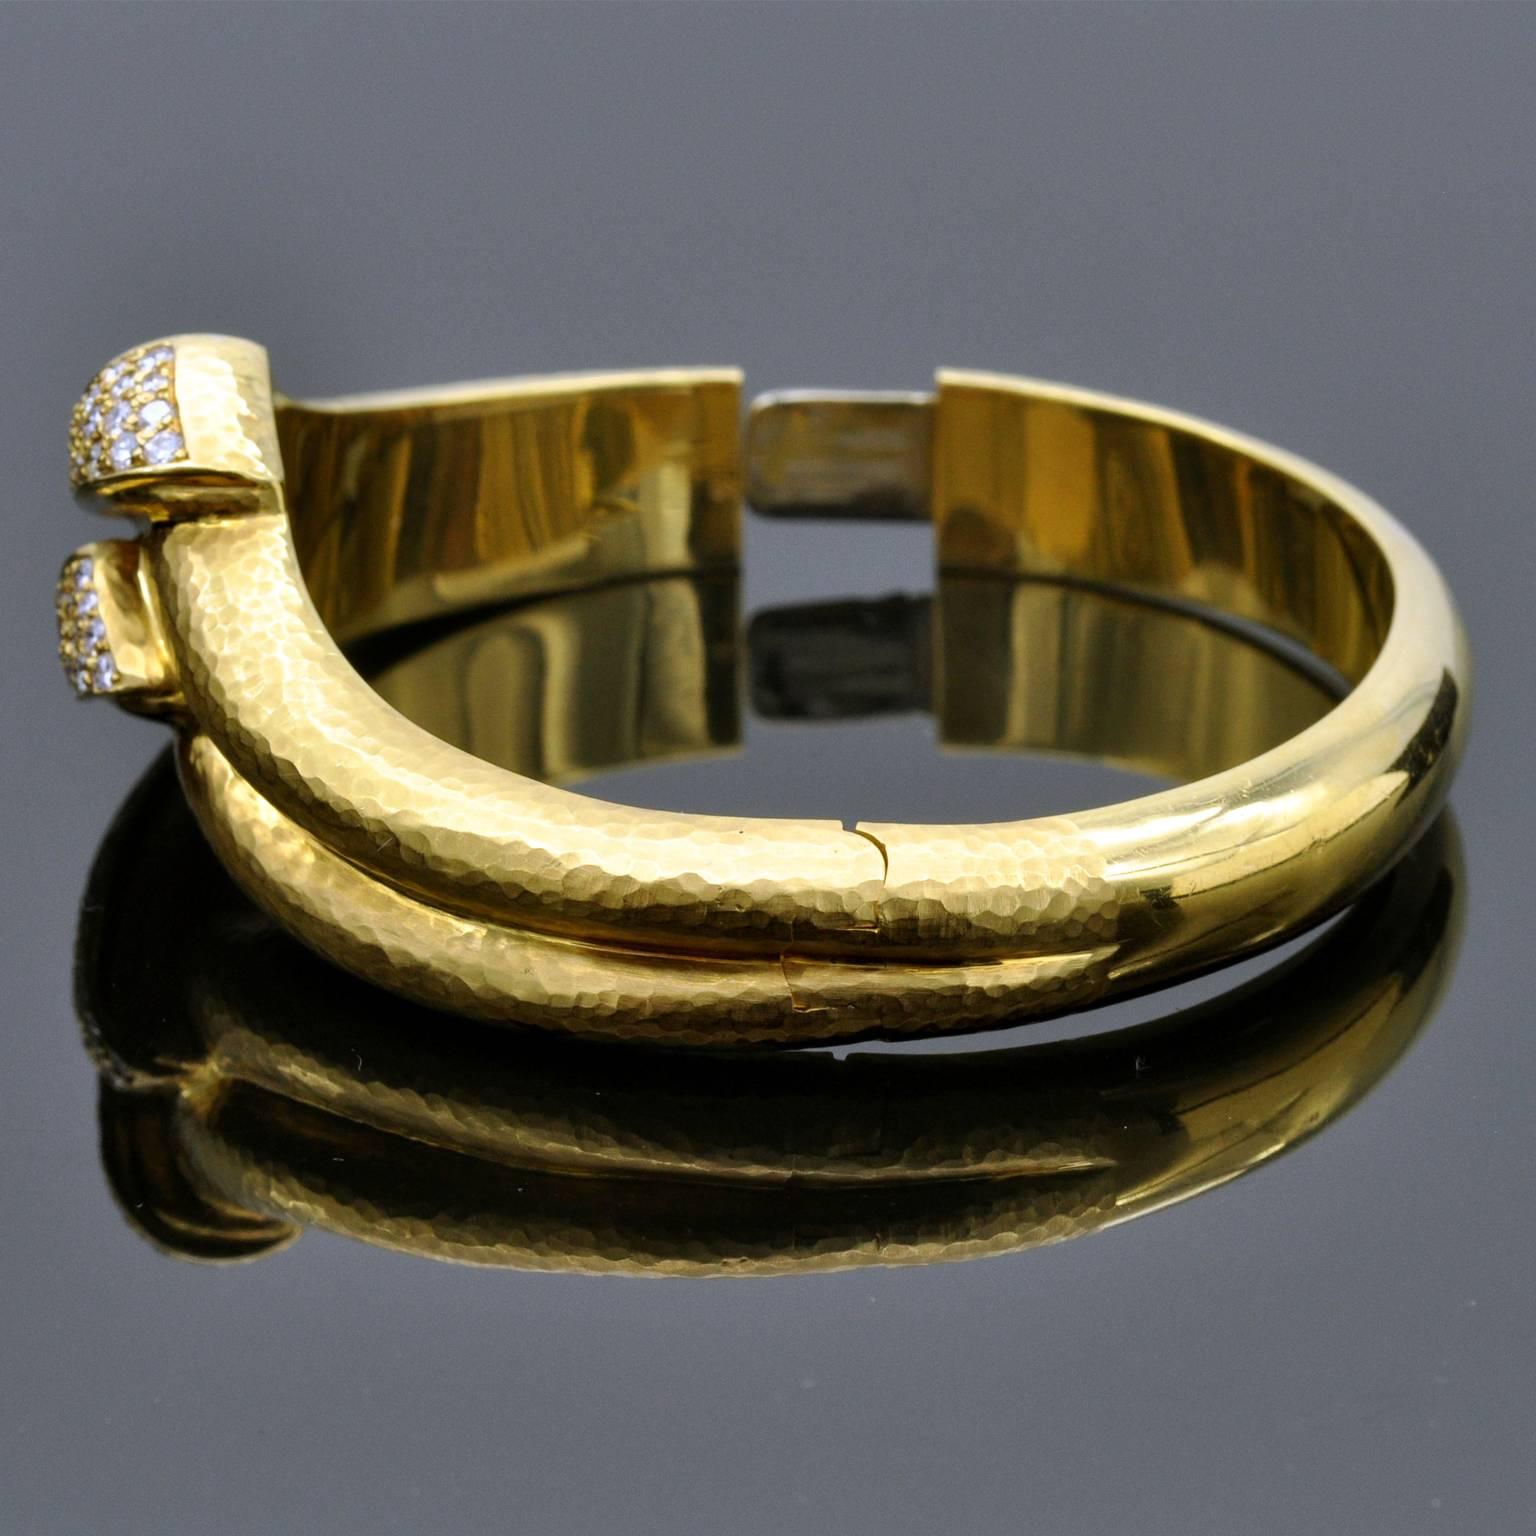 Brilliant Cut Hammered Gold and Diamond Cuff Bracelet